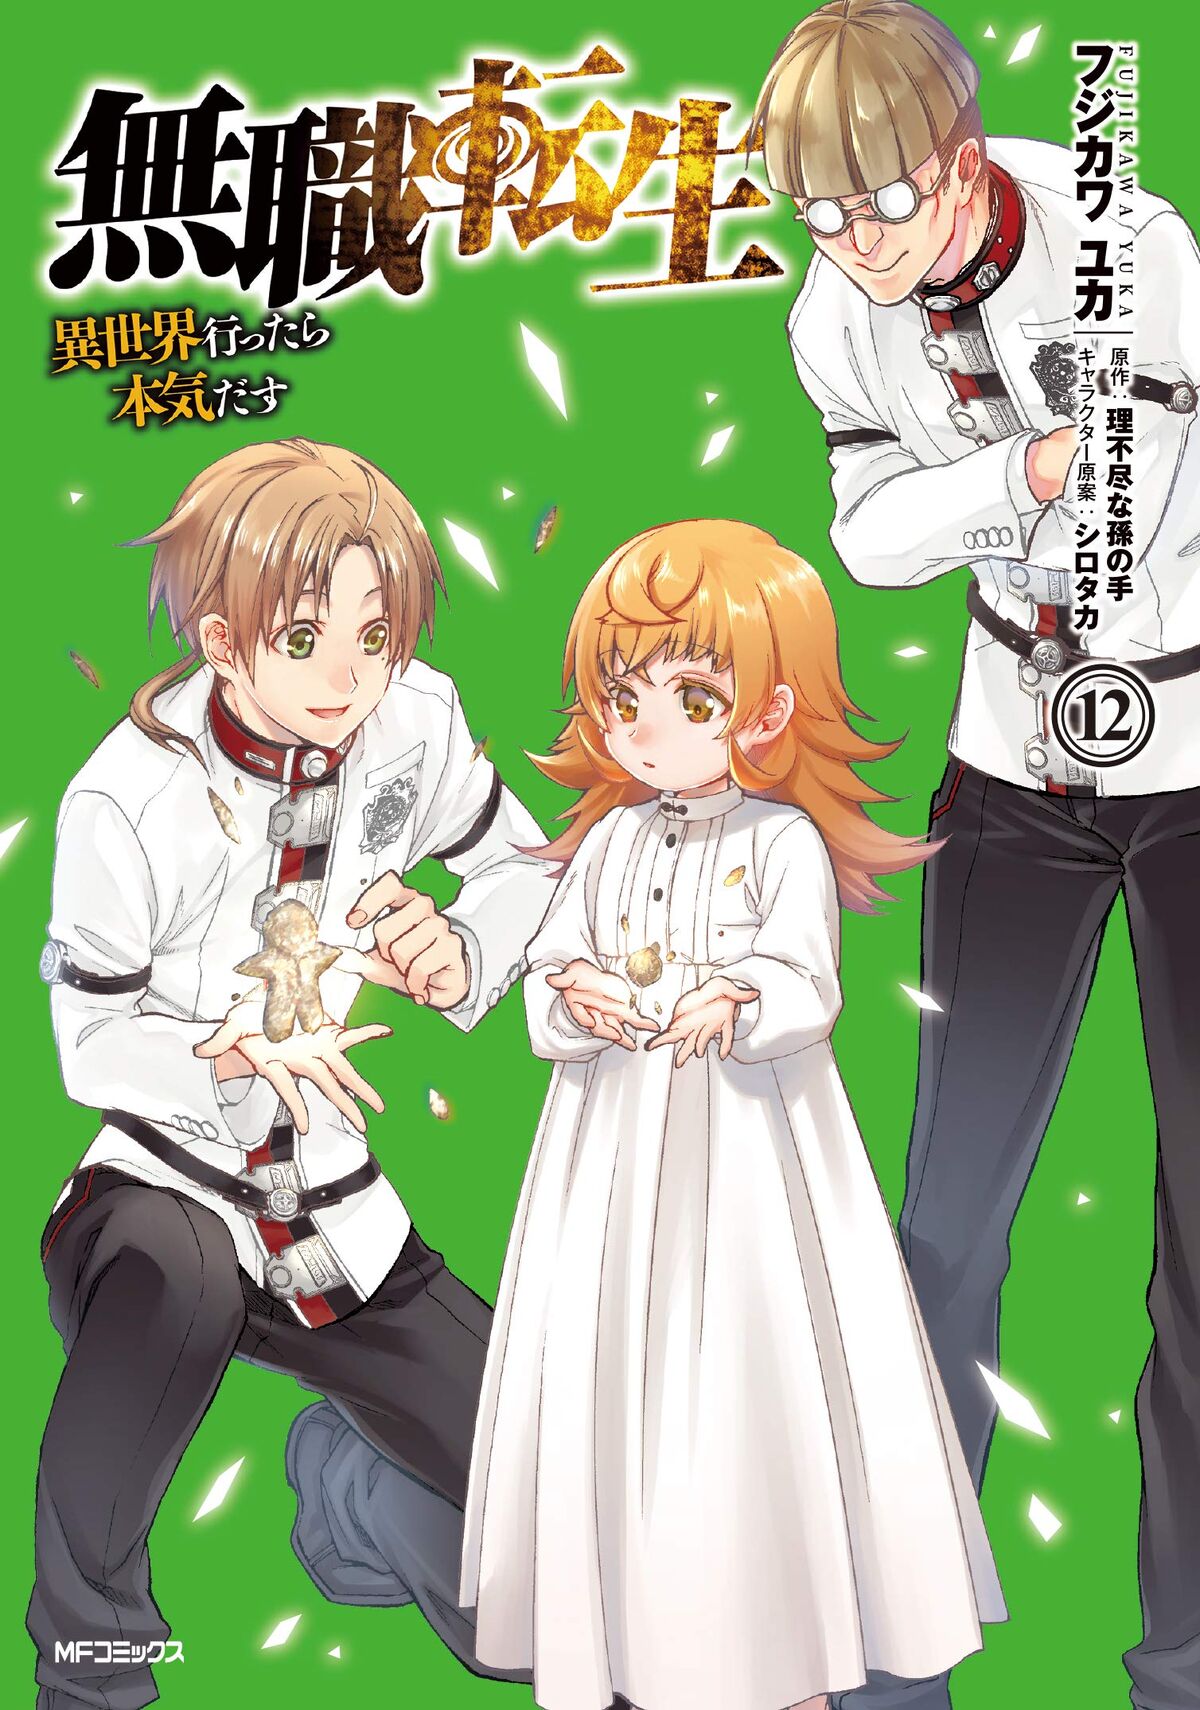 Light Novel Volume 14, Mushoku Tensei Wiki